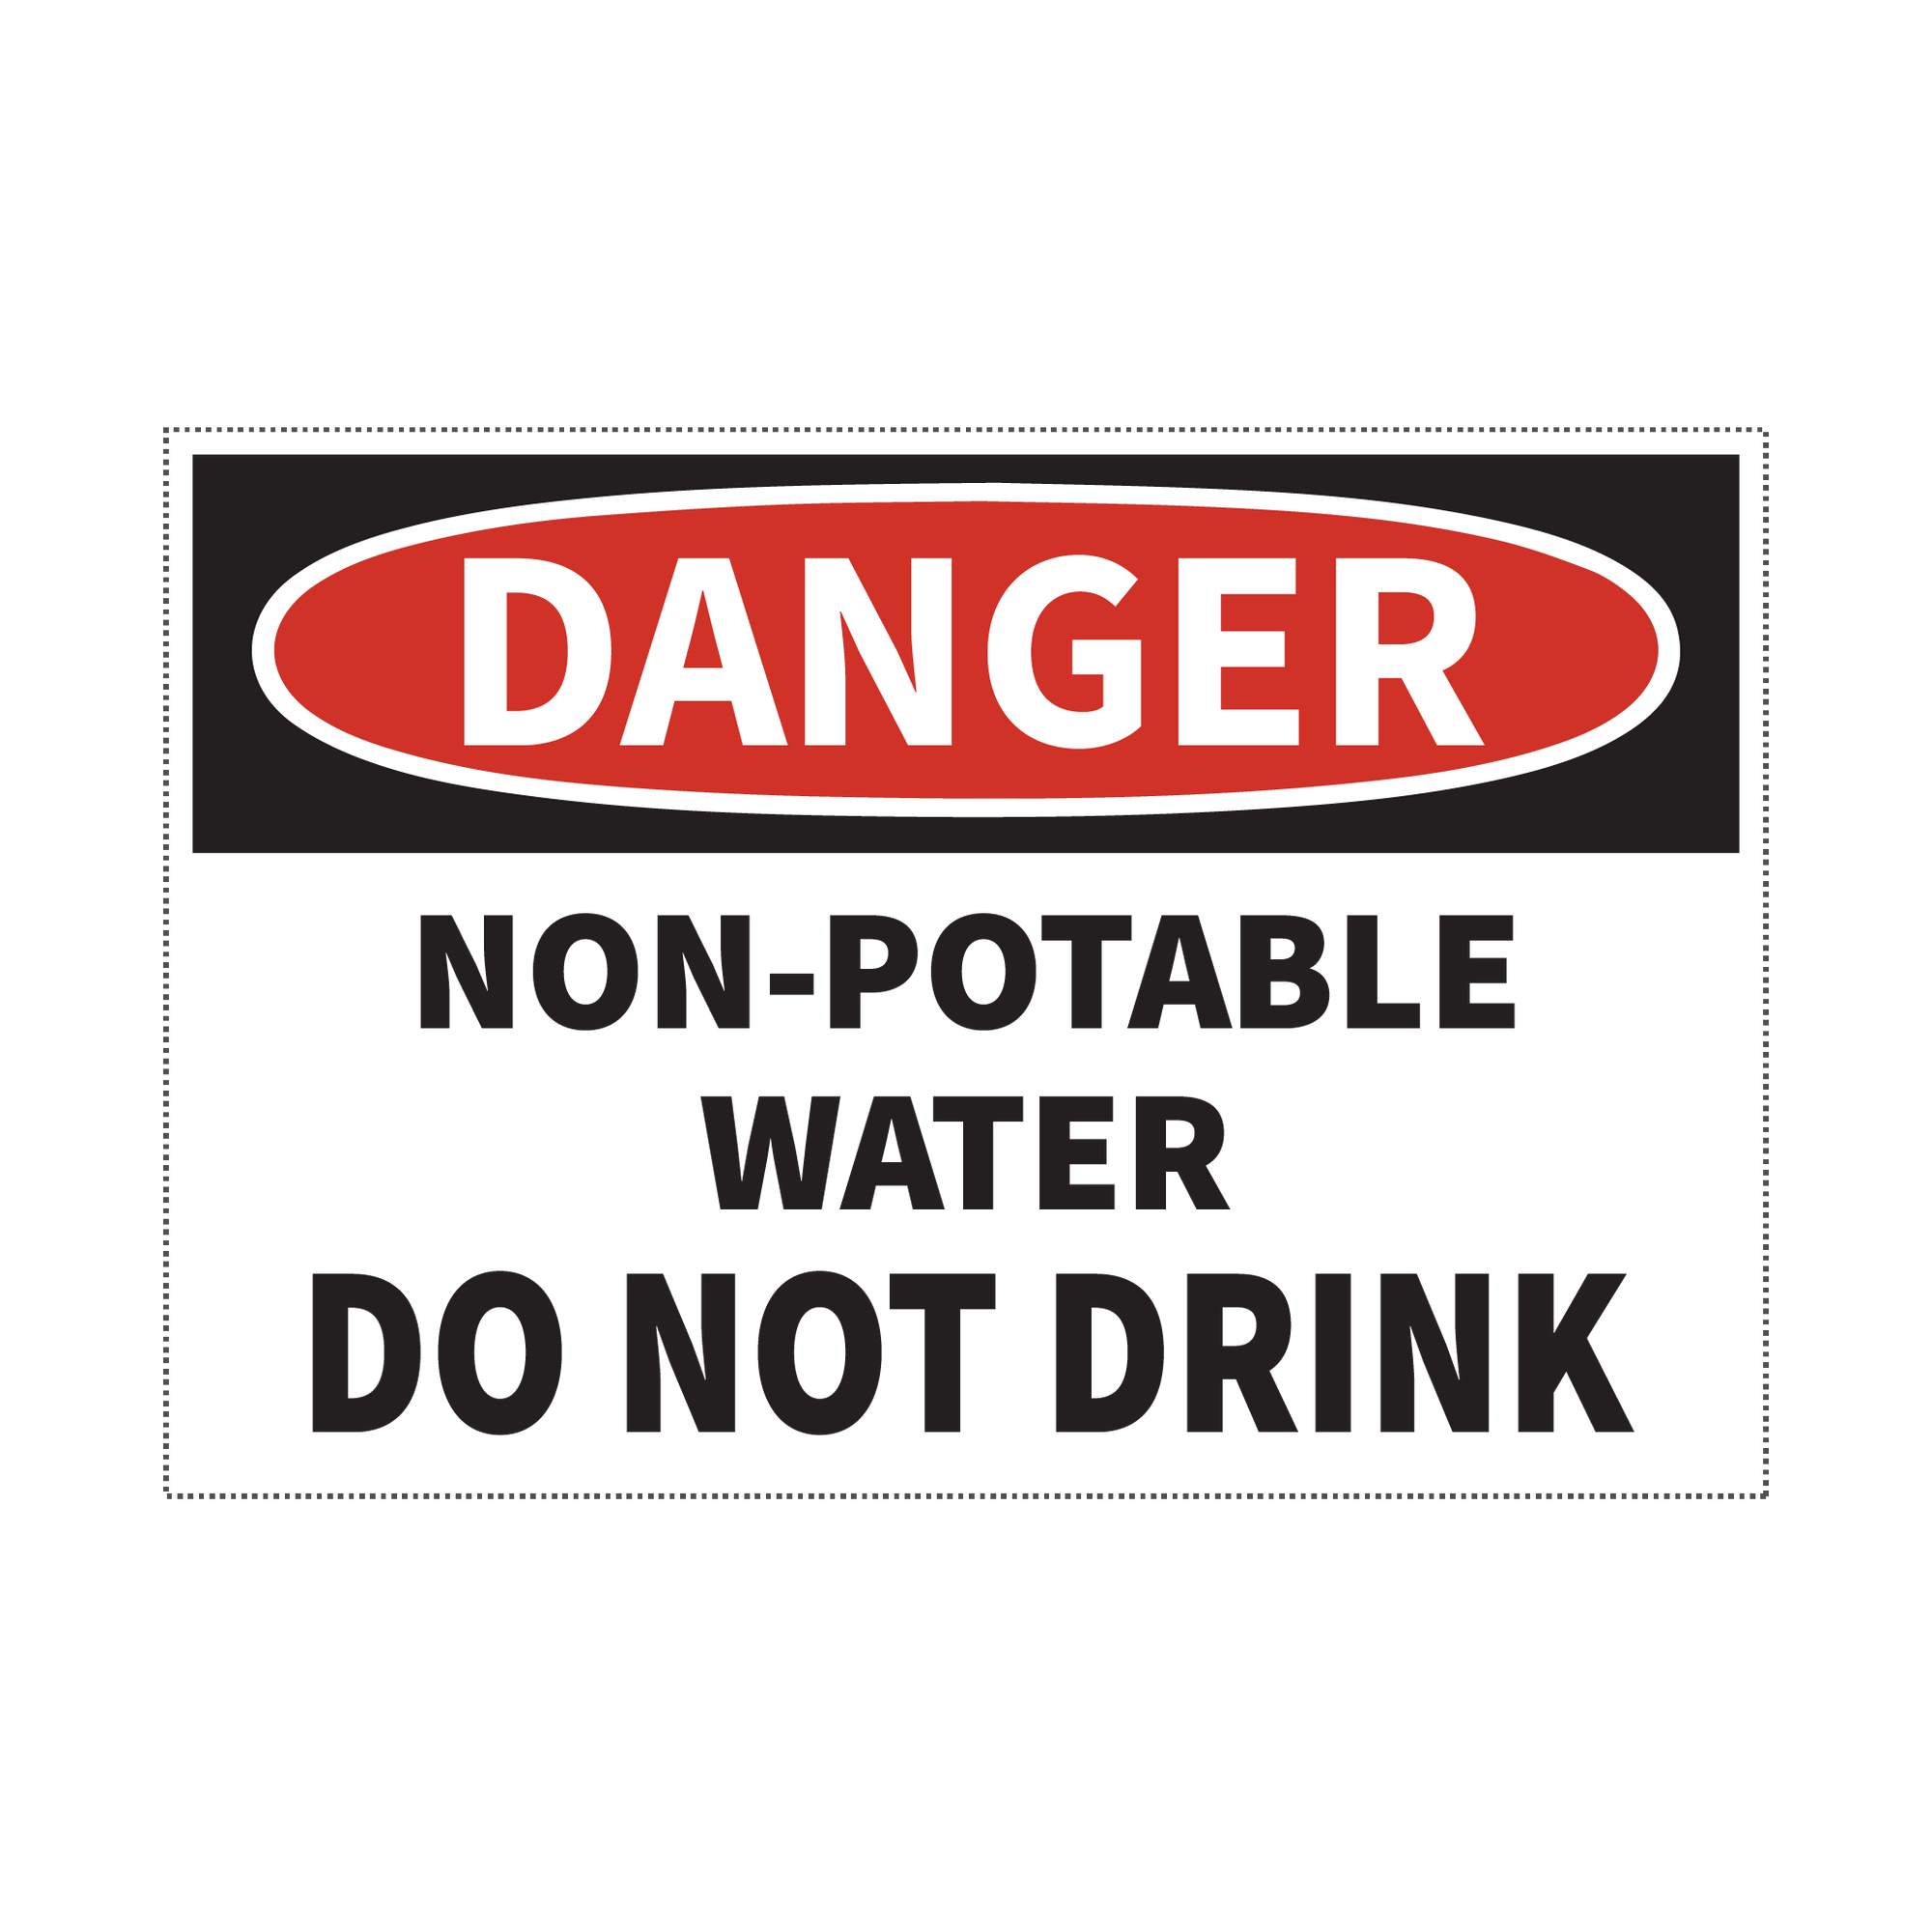 DANGER NON-POTABLE WATER DO NOT DRINK - S30